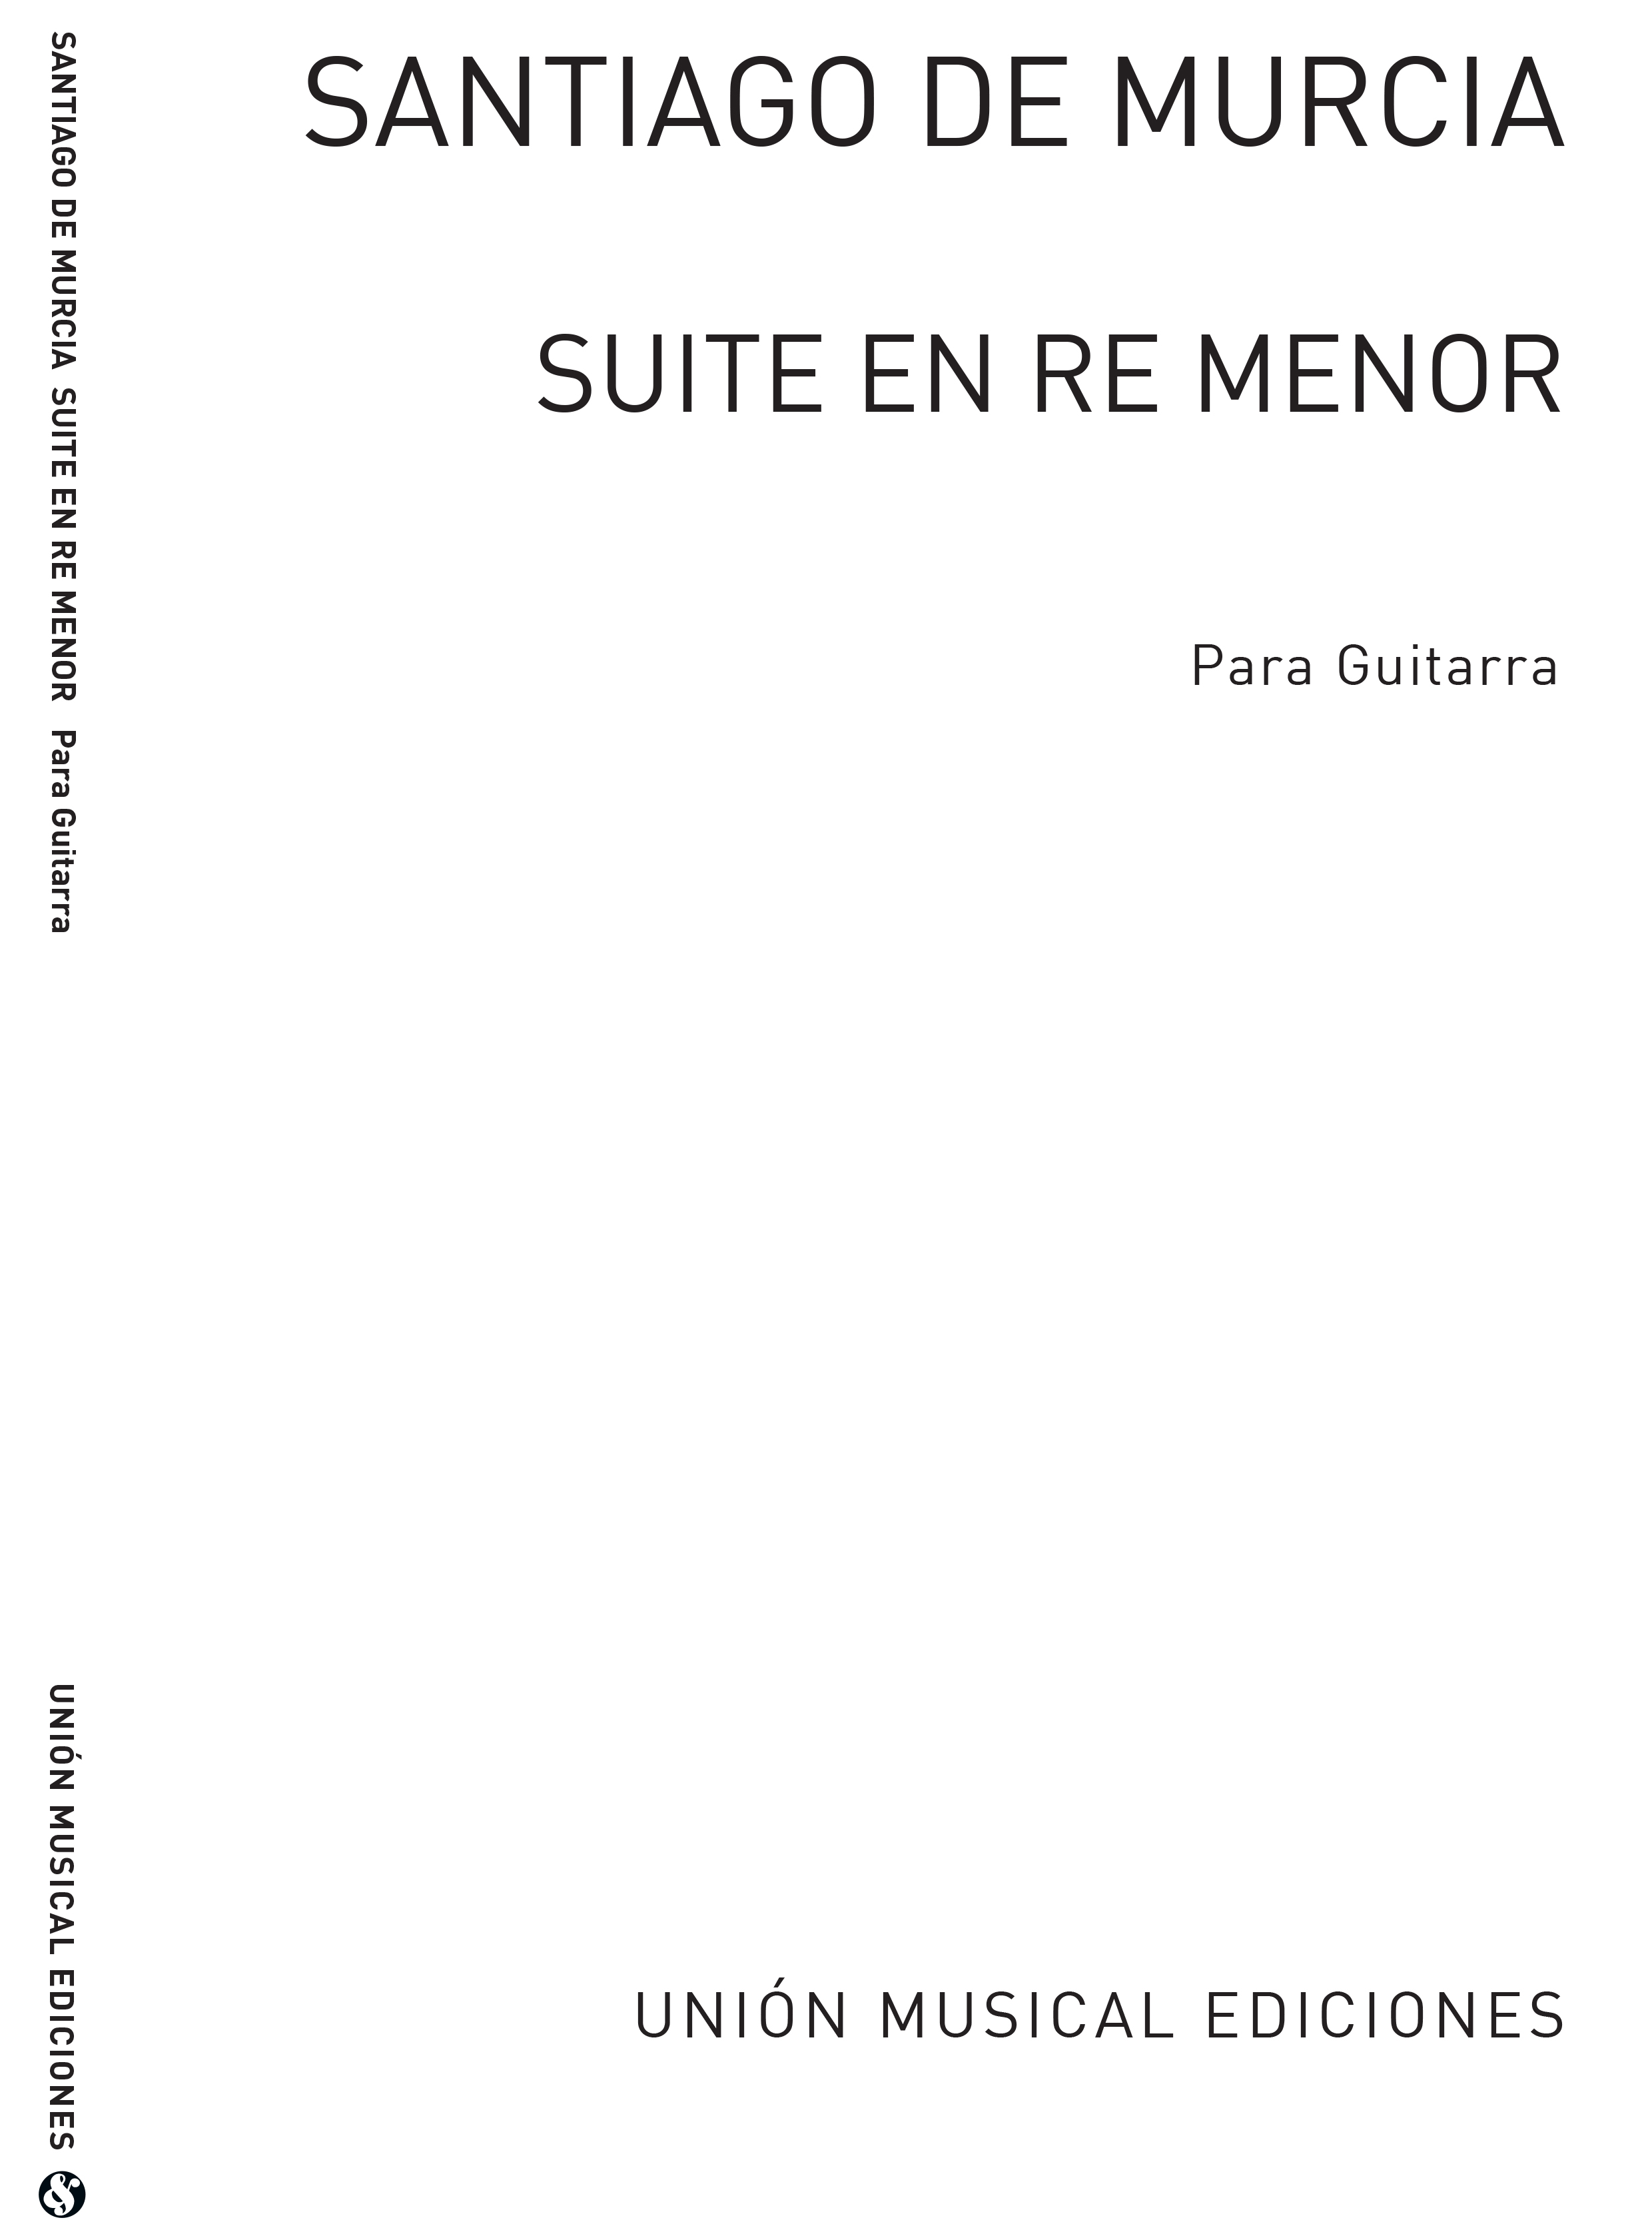 Santiago de Murcia: Suite En Re Menor: Guitar: Instrumental Work